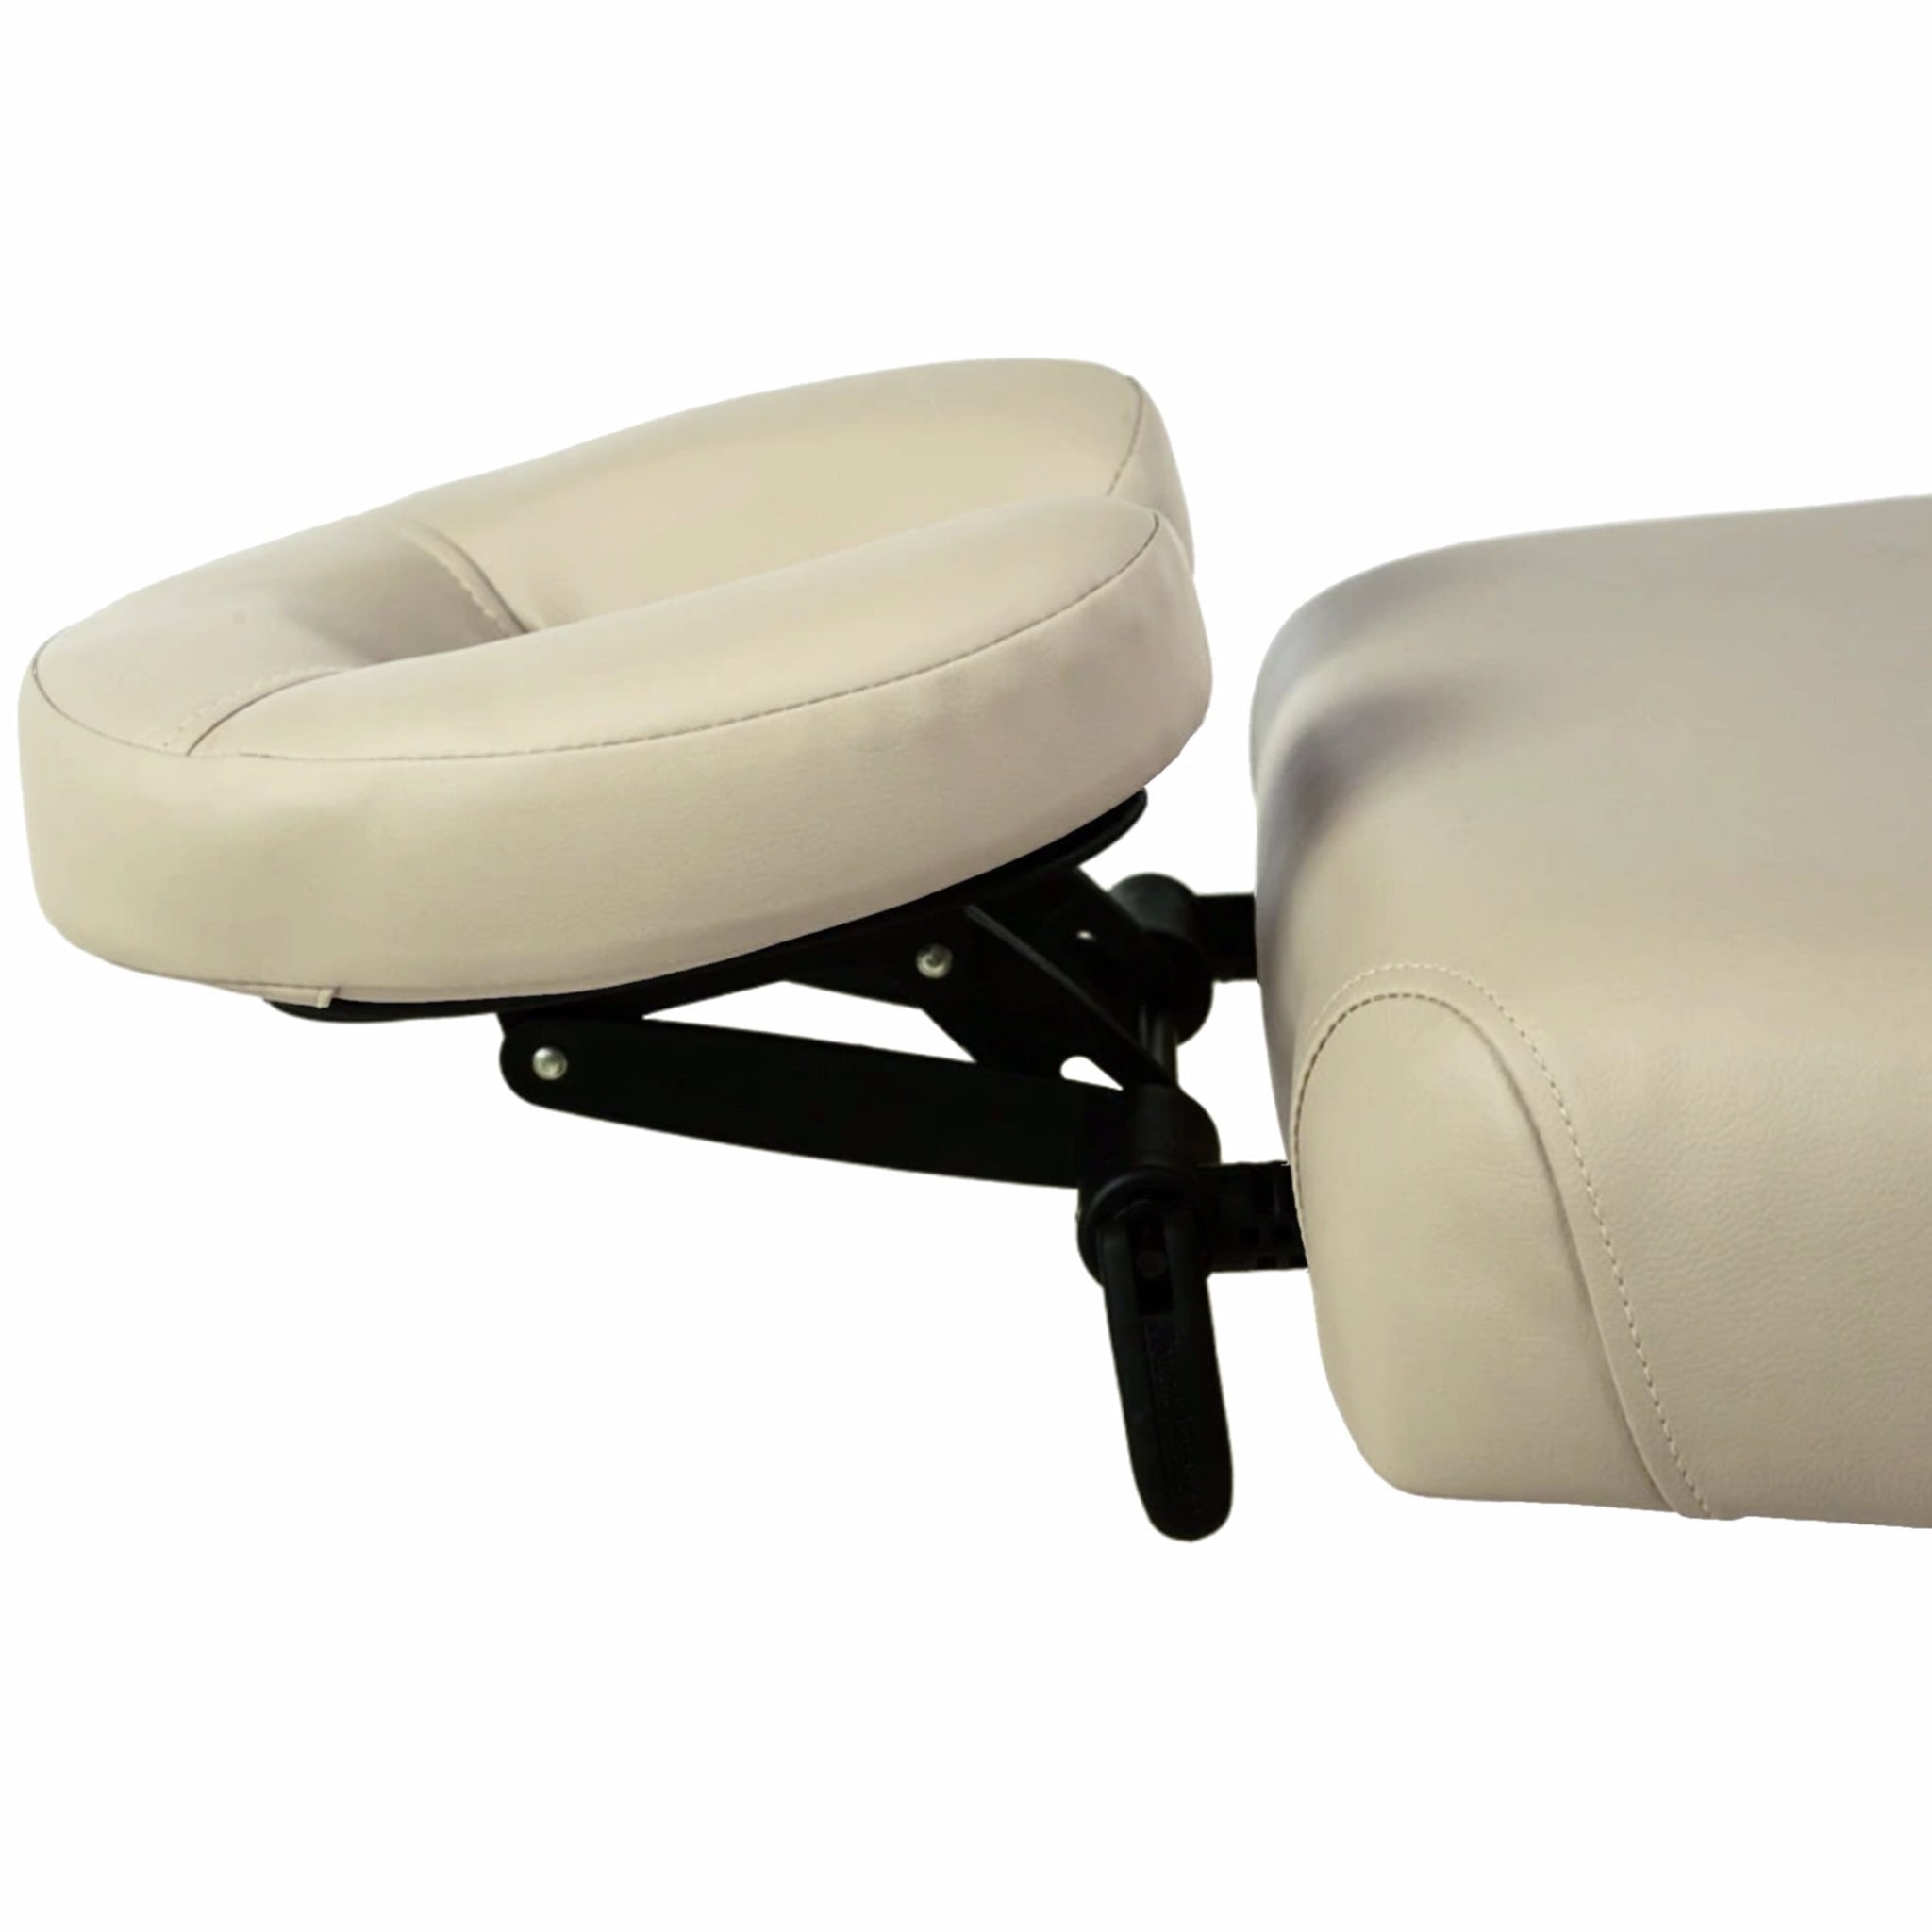 HealthyLine Rainbow Chakra Mat™ Chair 5718 Firm - Photon PEMF InframMa -  Purely Relaxation